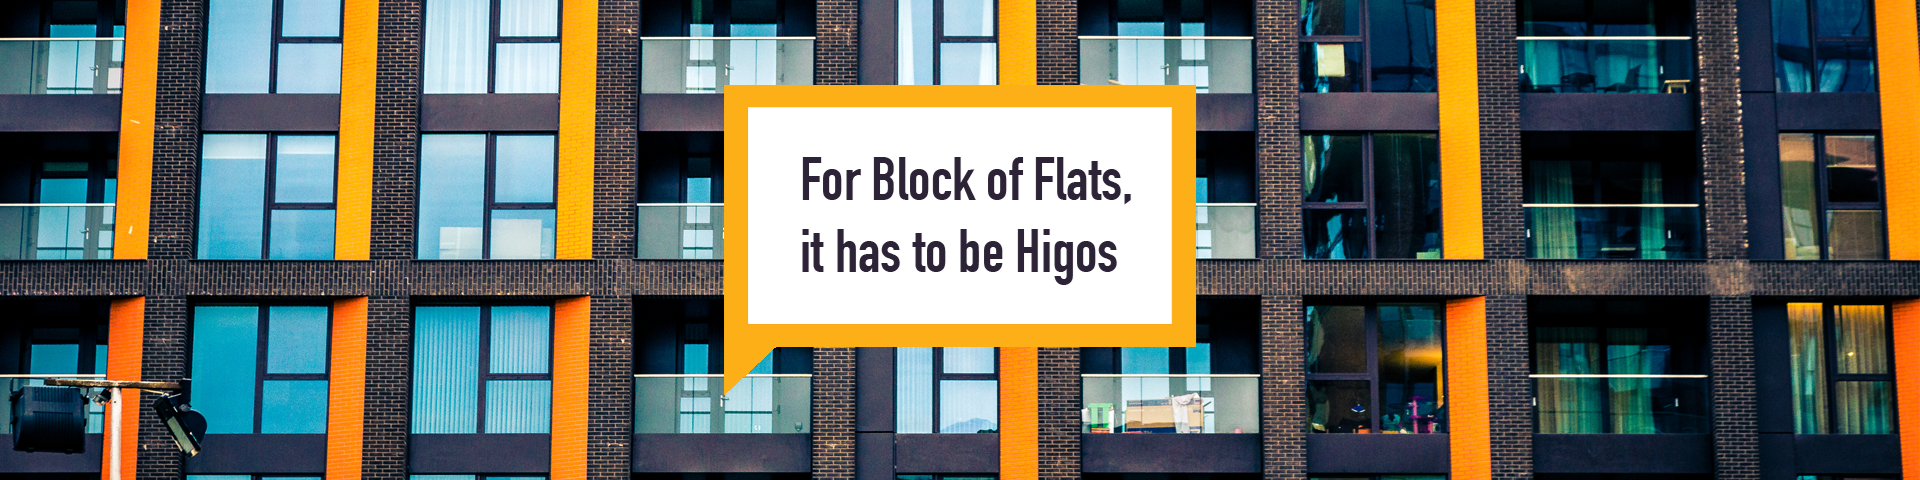 Higos commercial insurance block of flats